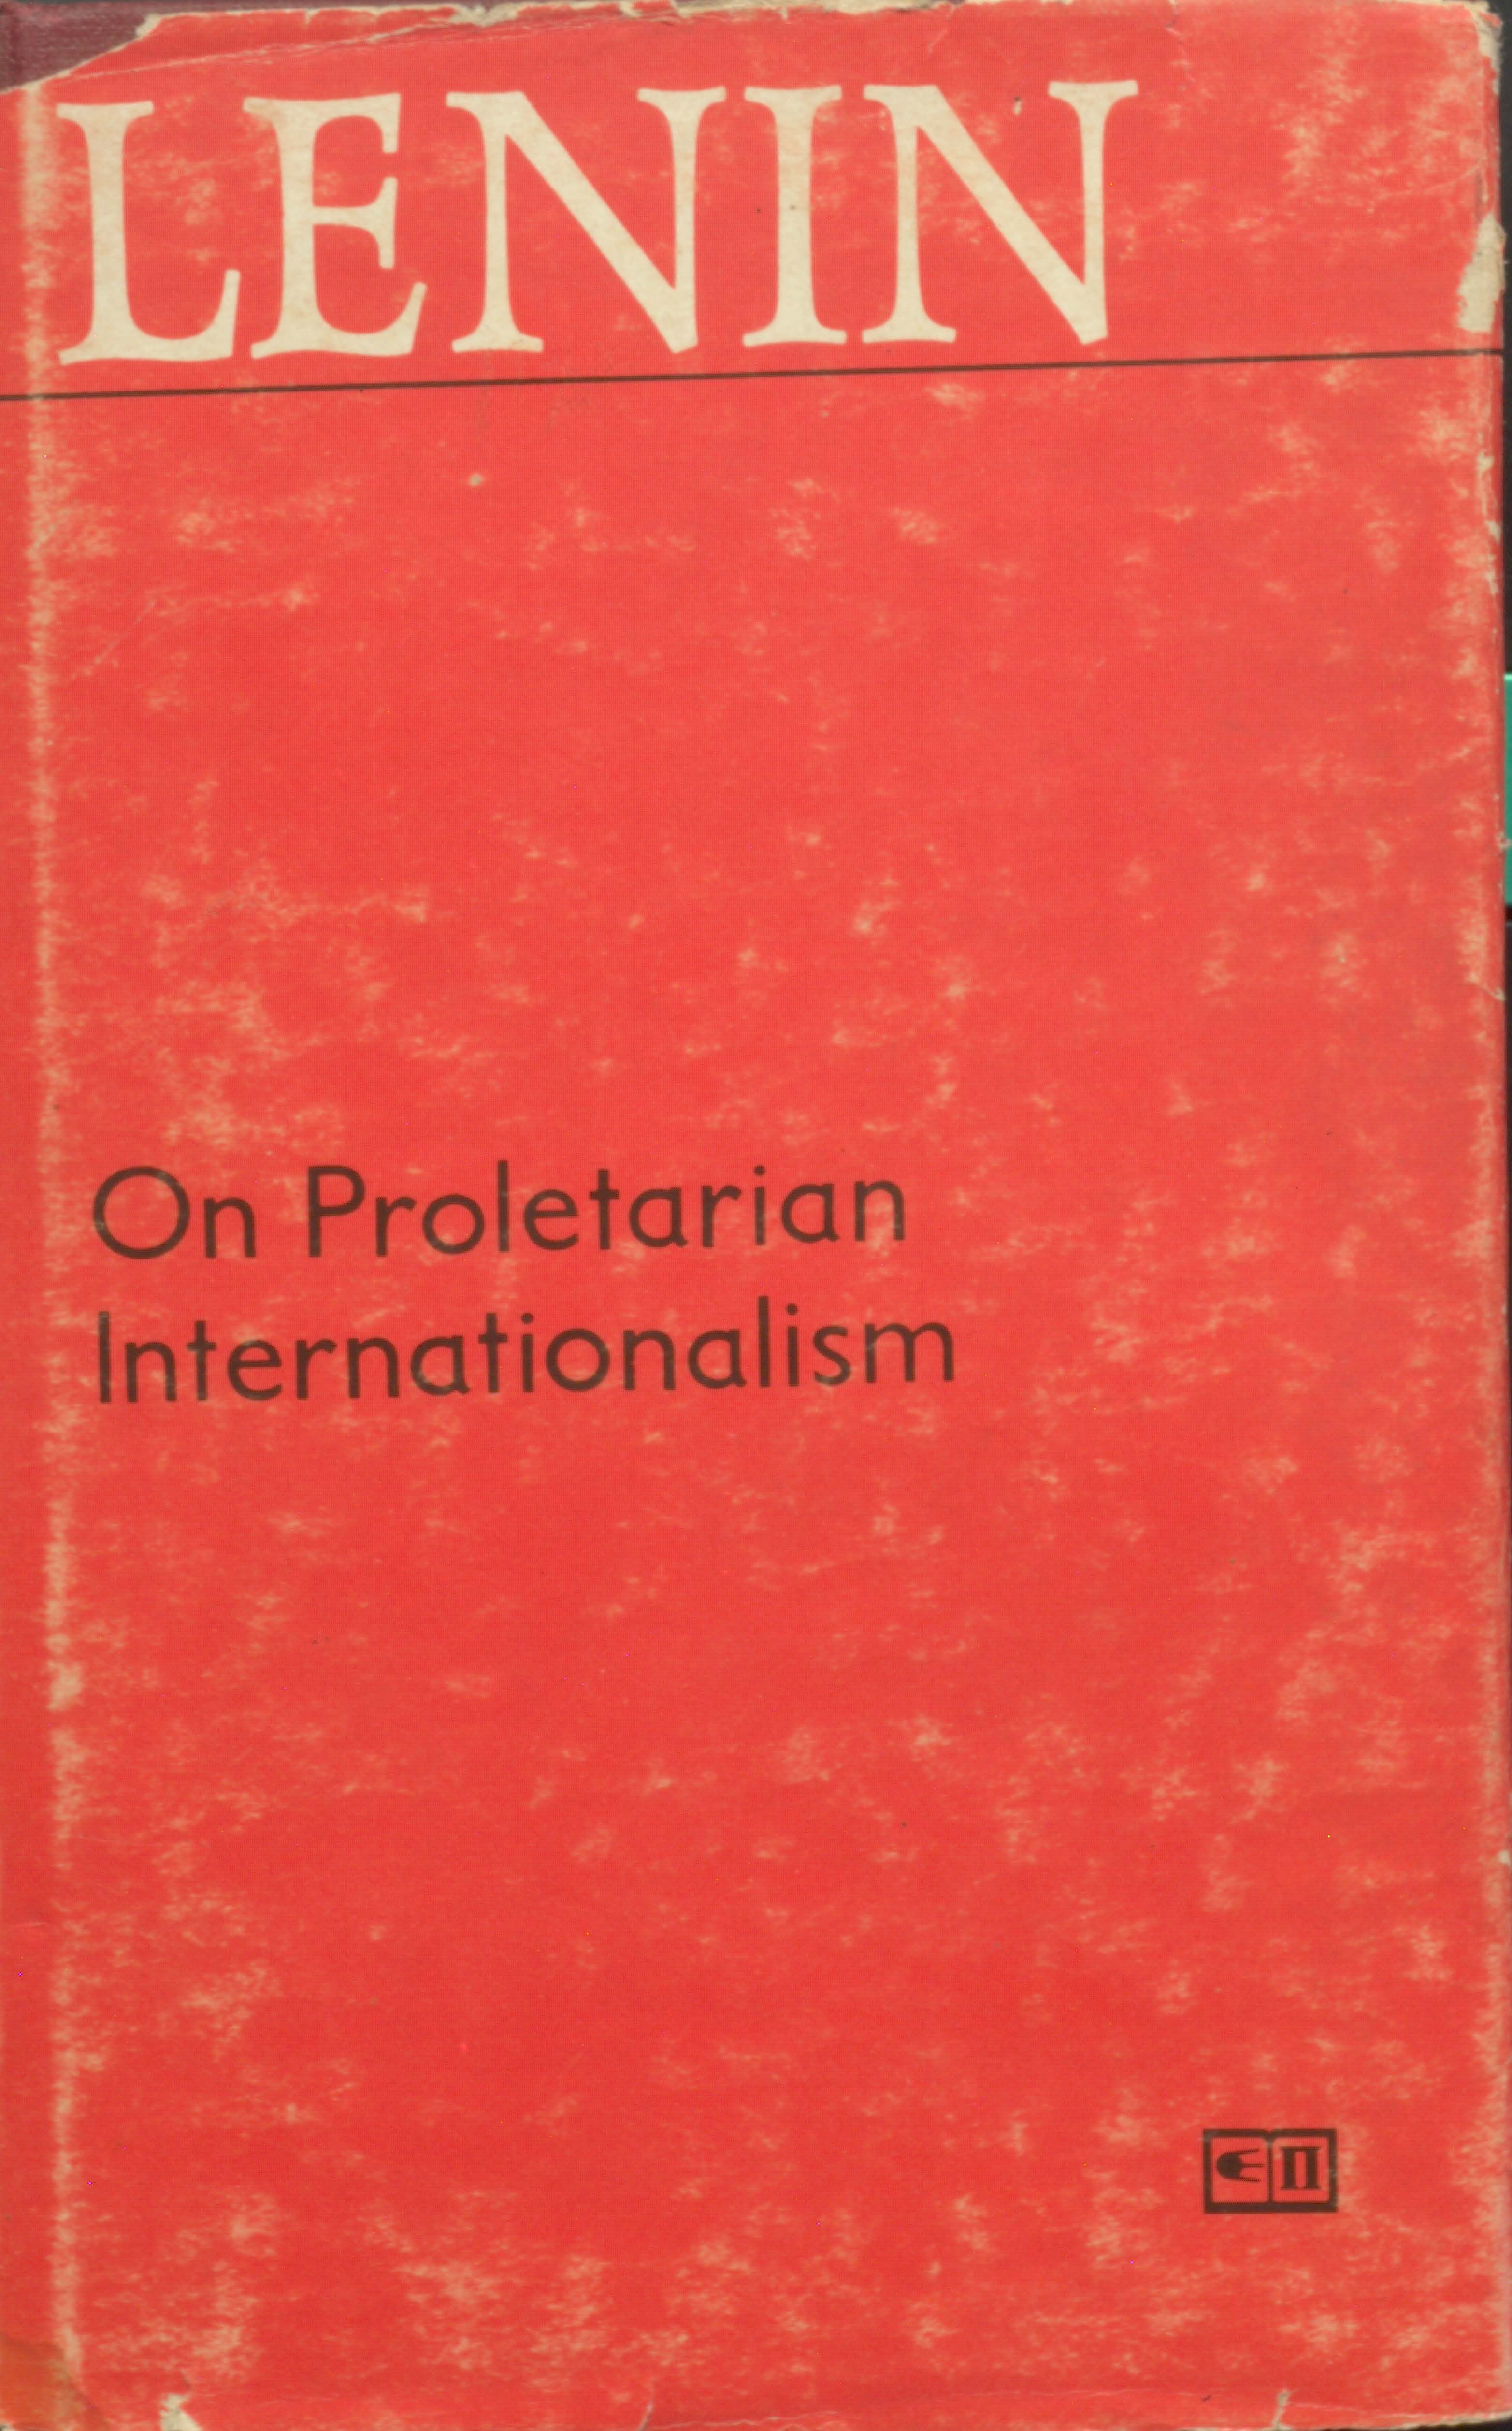 Lenin on proletarian internationalism